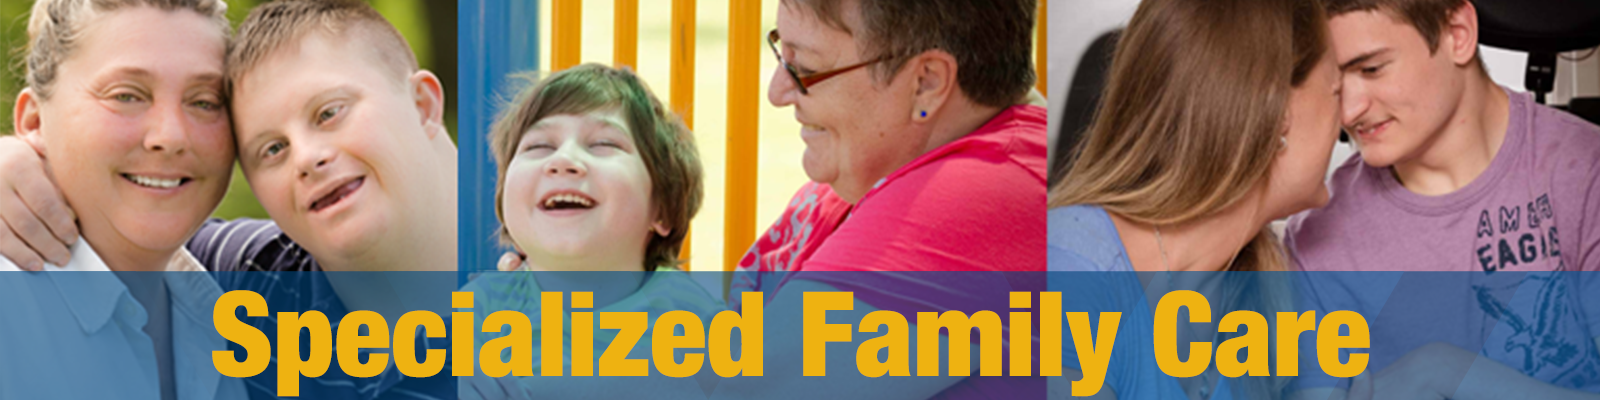 Specialized Family Care Program